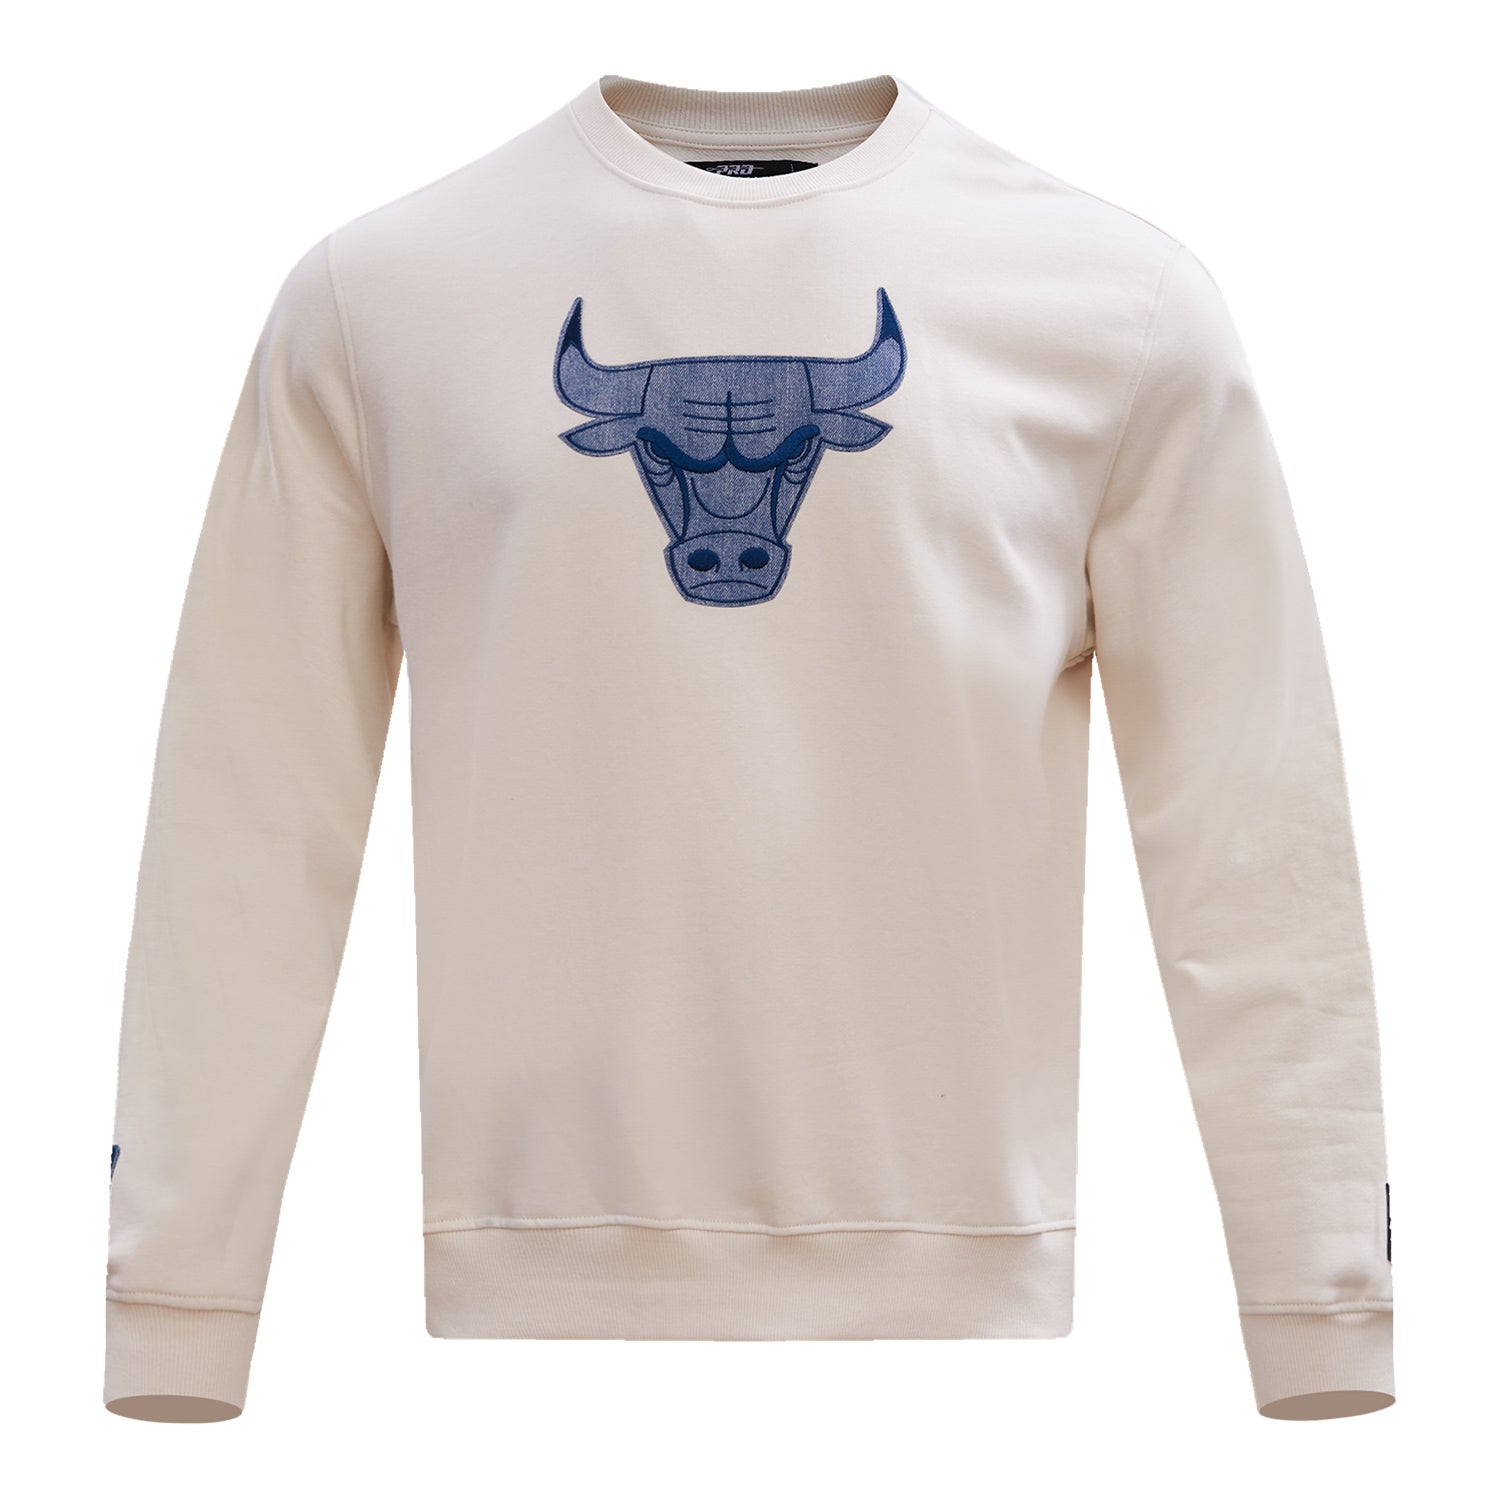 Blue Chicago Bulls NBA Jerseys for sale